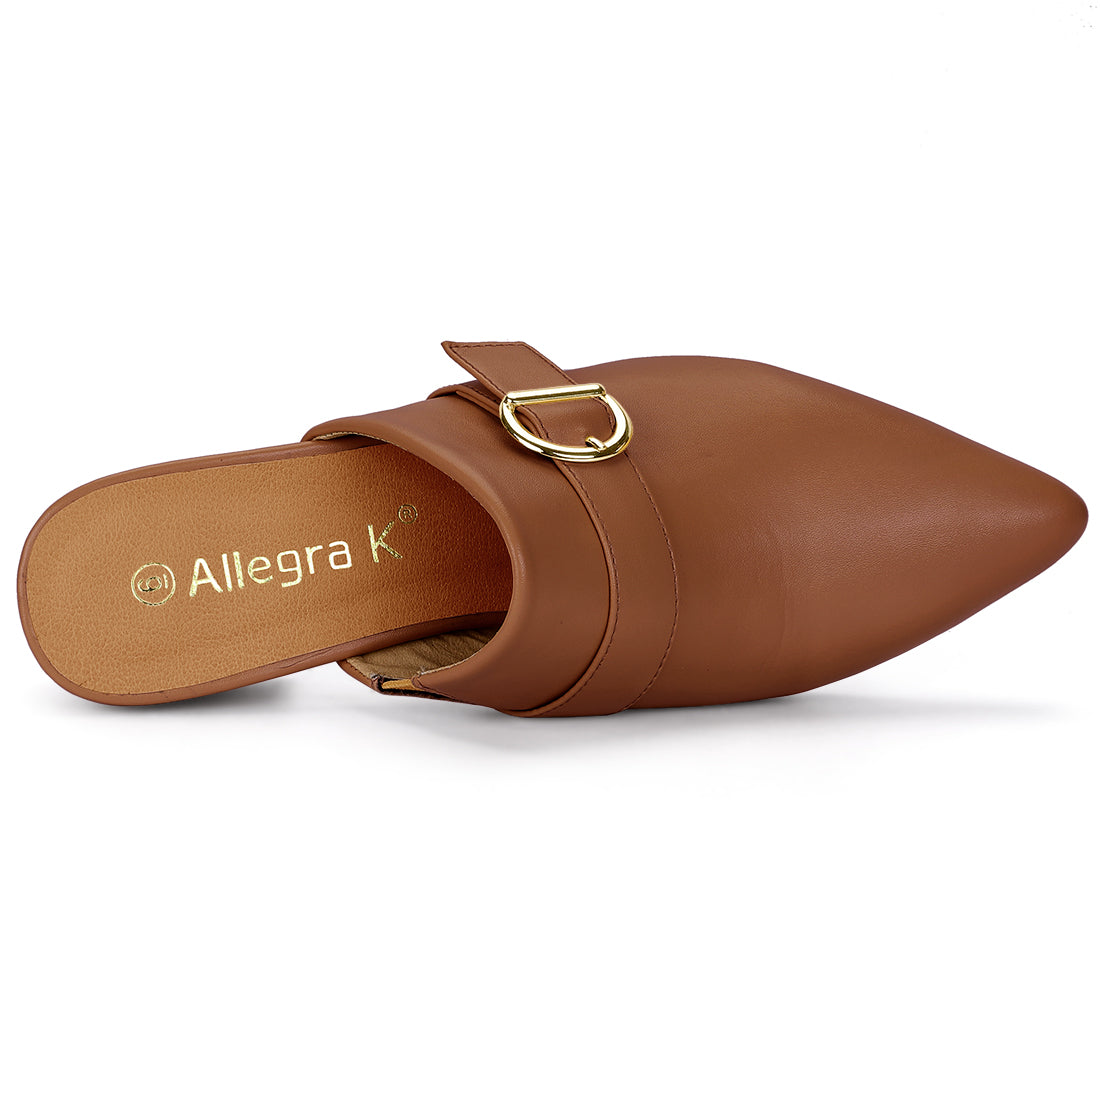 Allegra K Pointed Toe Slip on Block Heel Sandals Mules